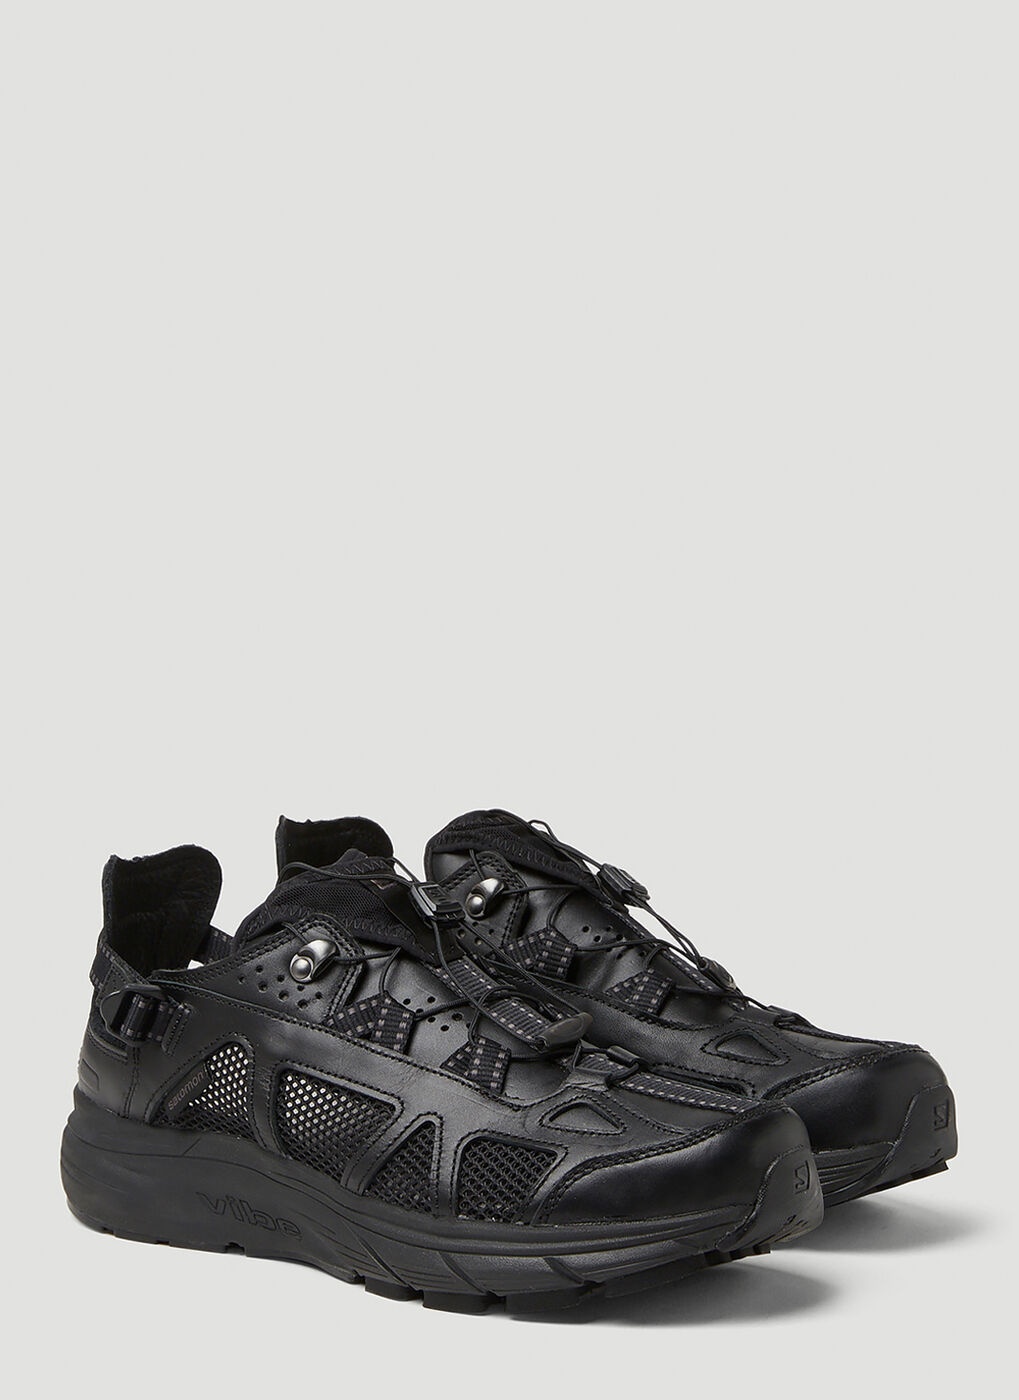 Techsonic LTR Advanced Sneakers in Black Salomon